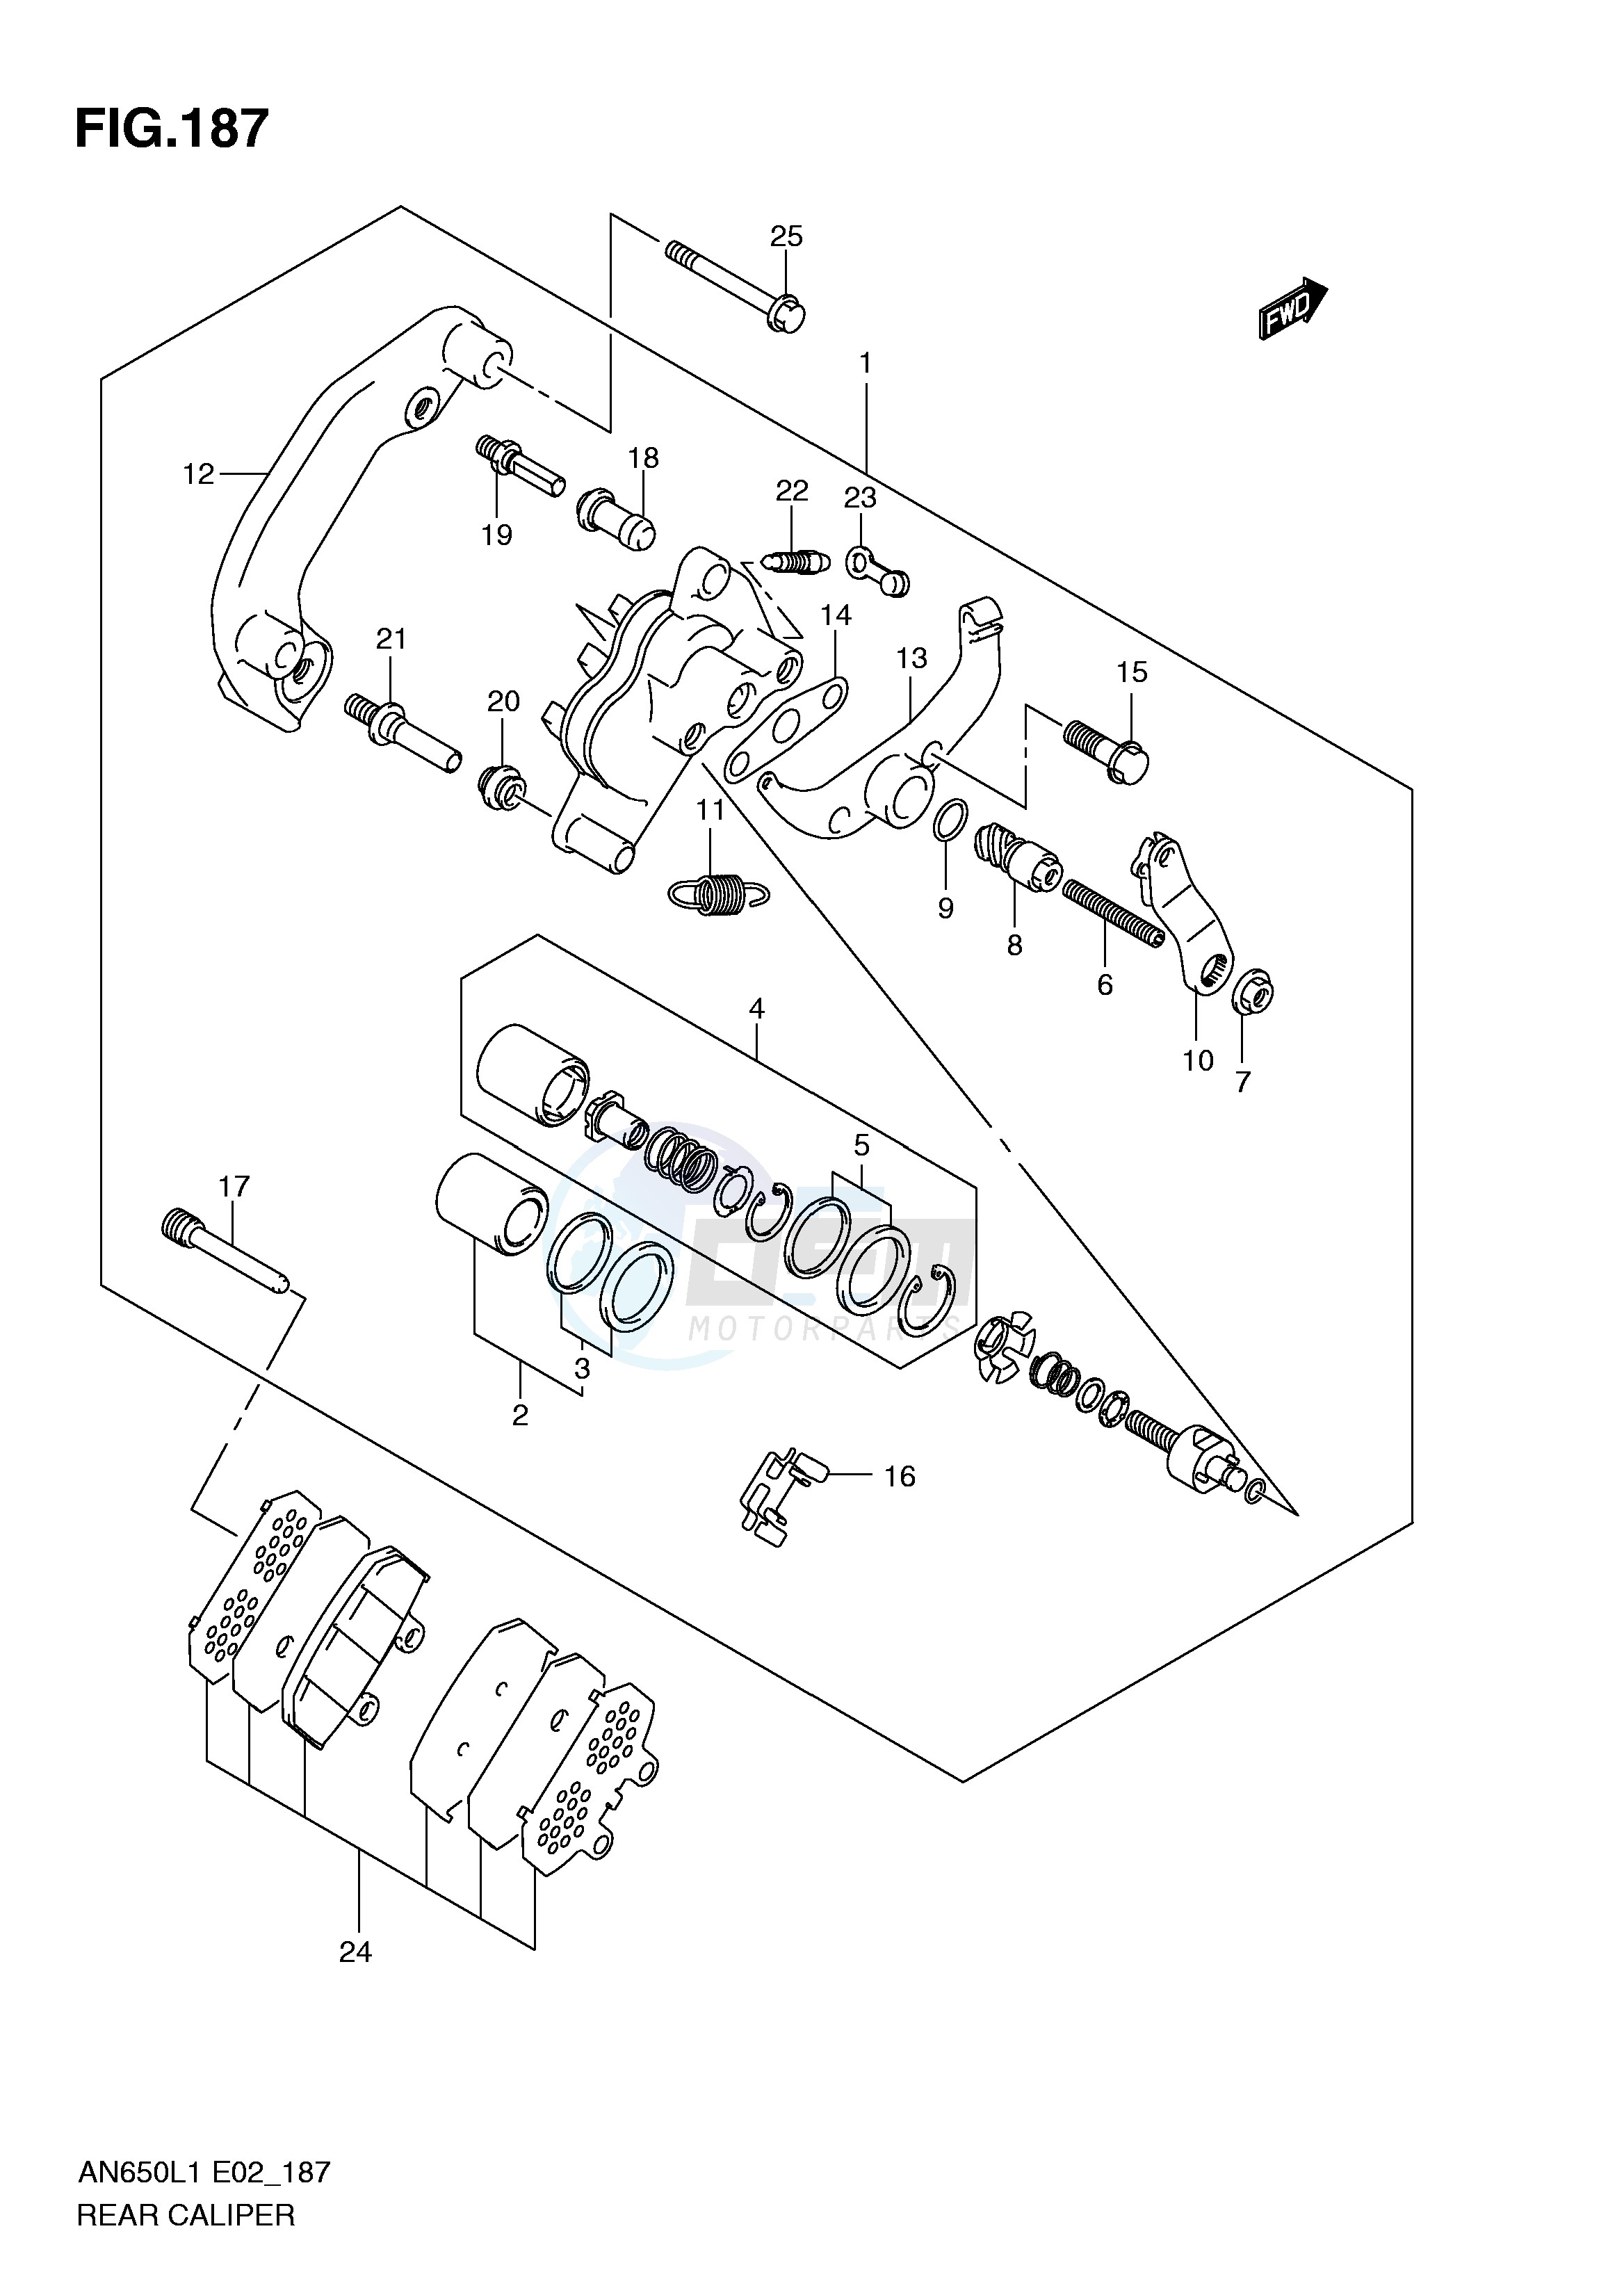 REAR CALIPER (AN650AL1 E51) blueprint